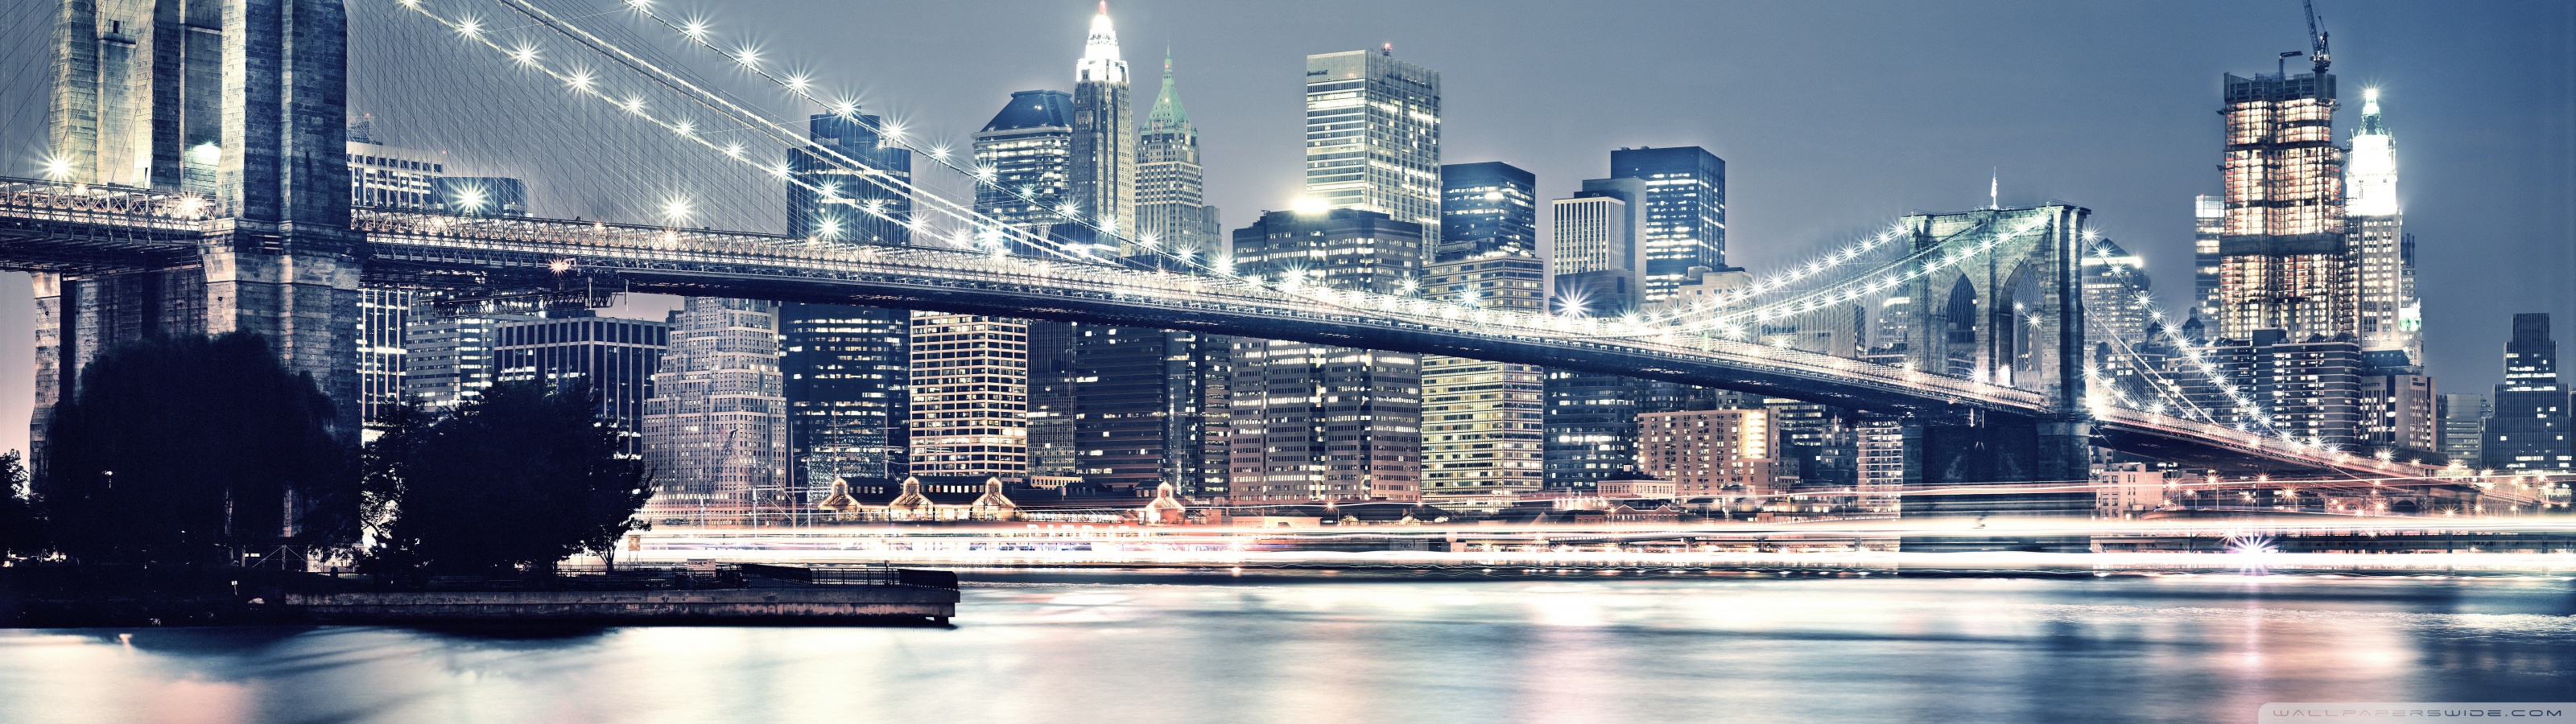 Brooklyn Bridge At Night Ultra HD Desktop Background Wallpaper For